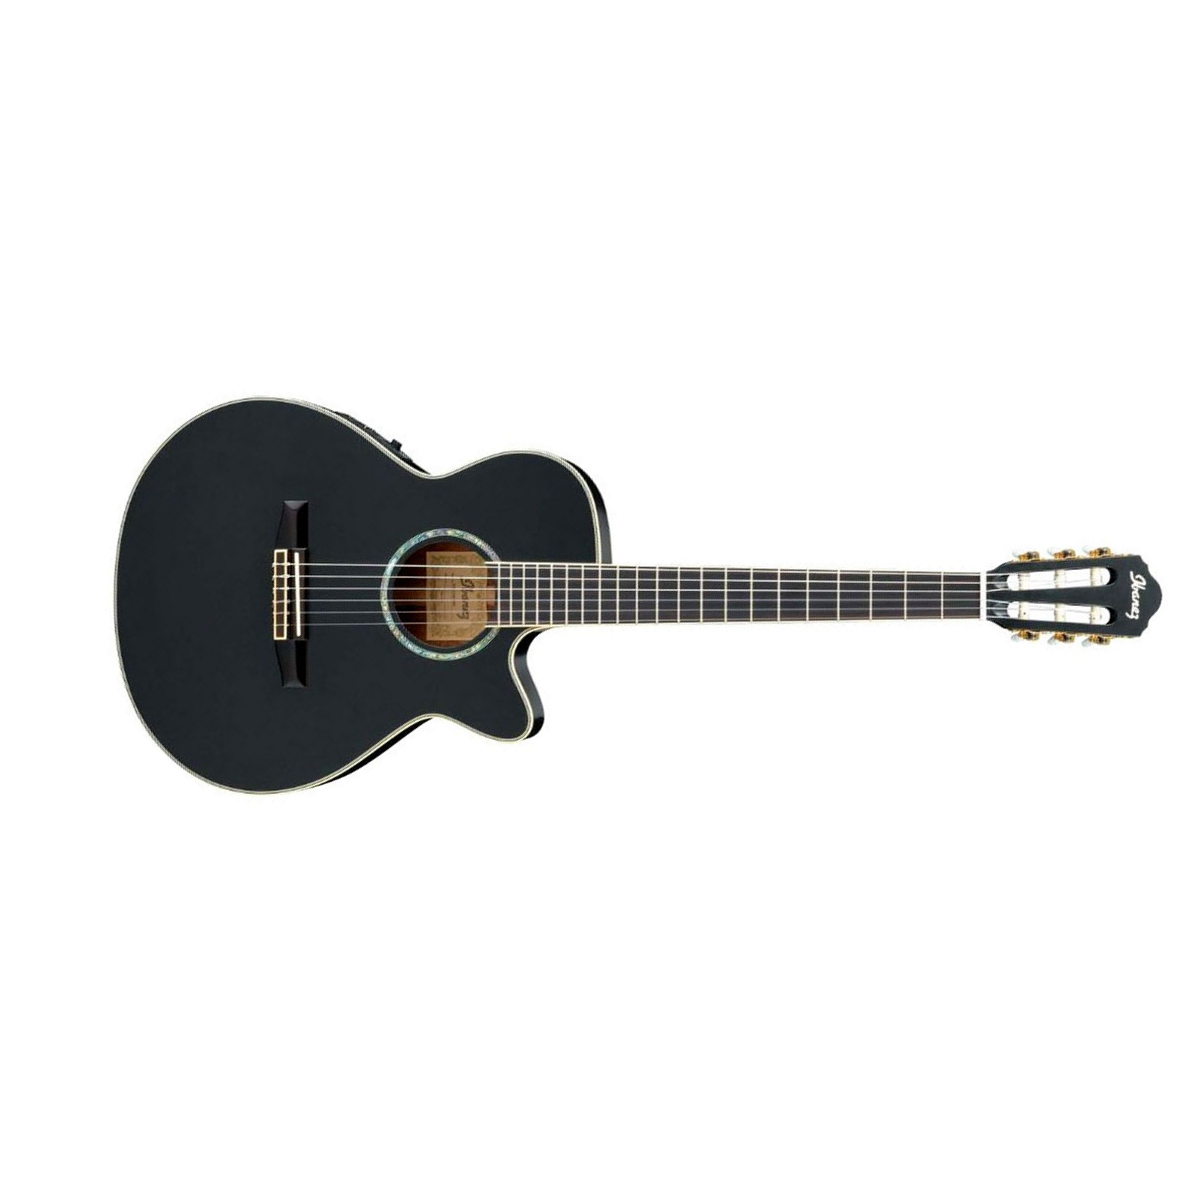 Ibanez Aeg10nii Bk Concert Cw Epicea Acajou - Black High Gloss - Classical guitar 4/4 size - Main picture